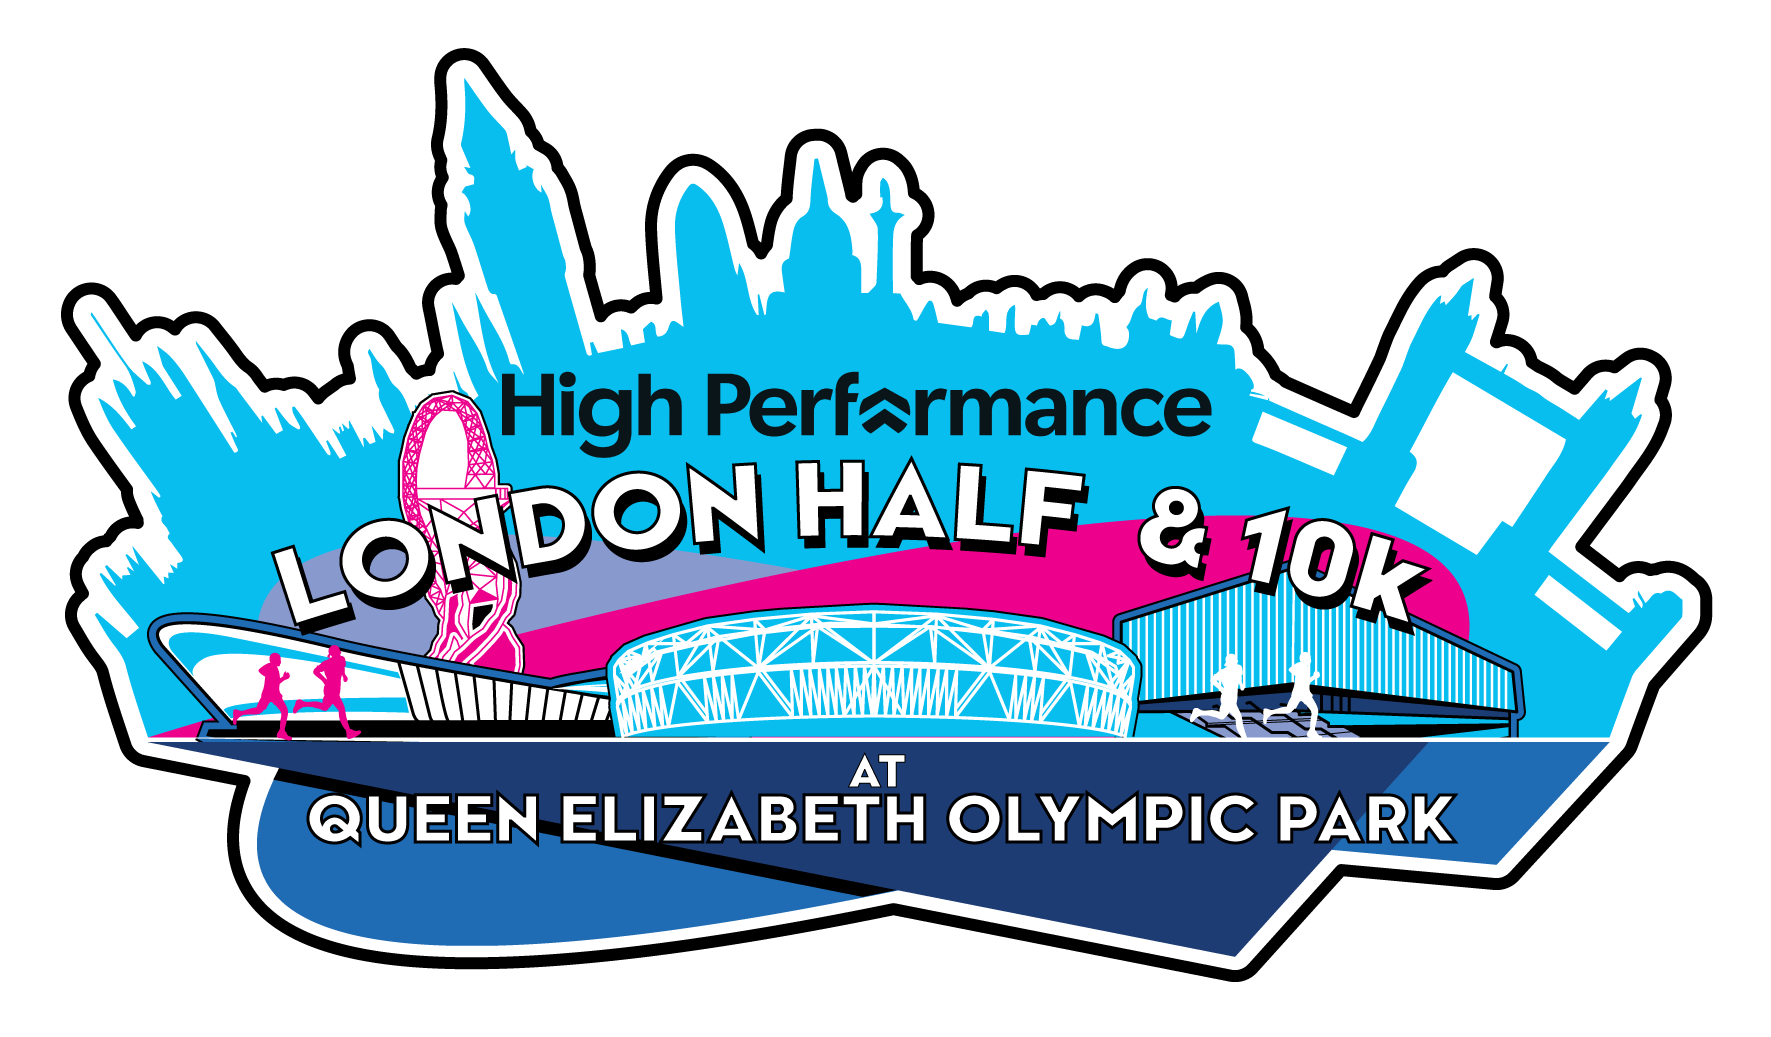 Queen Elizabeth Olympic Park Half Marathon - March